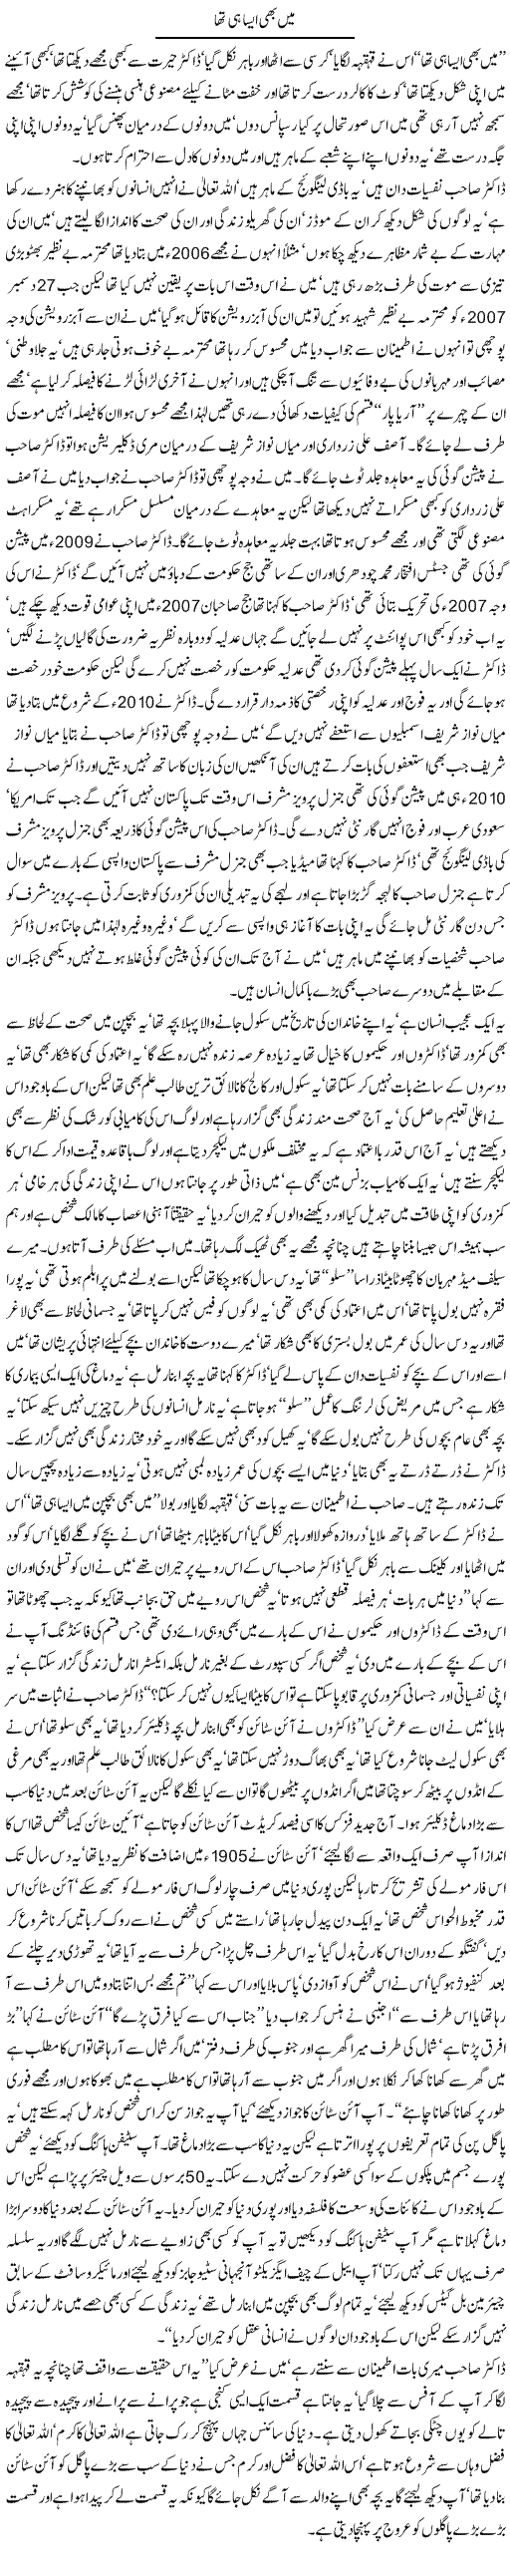 Genius People Express Column Javed Chaudhry 22 January 2012